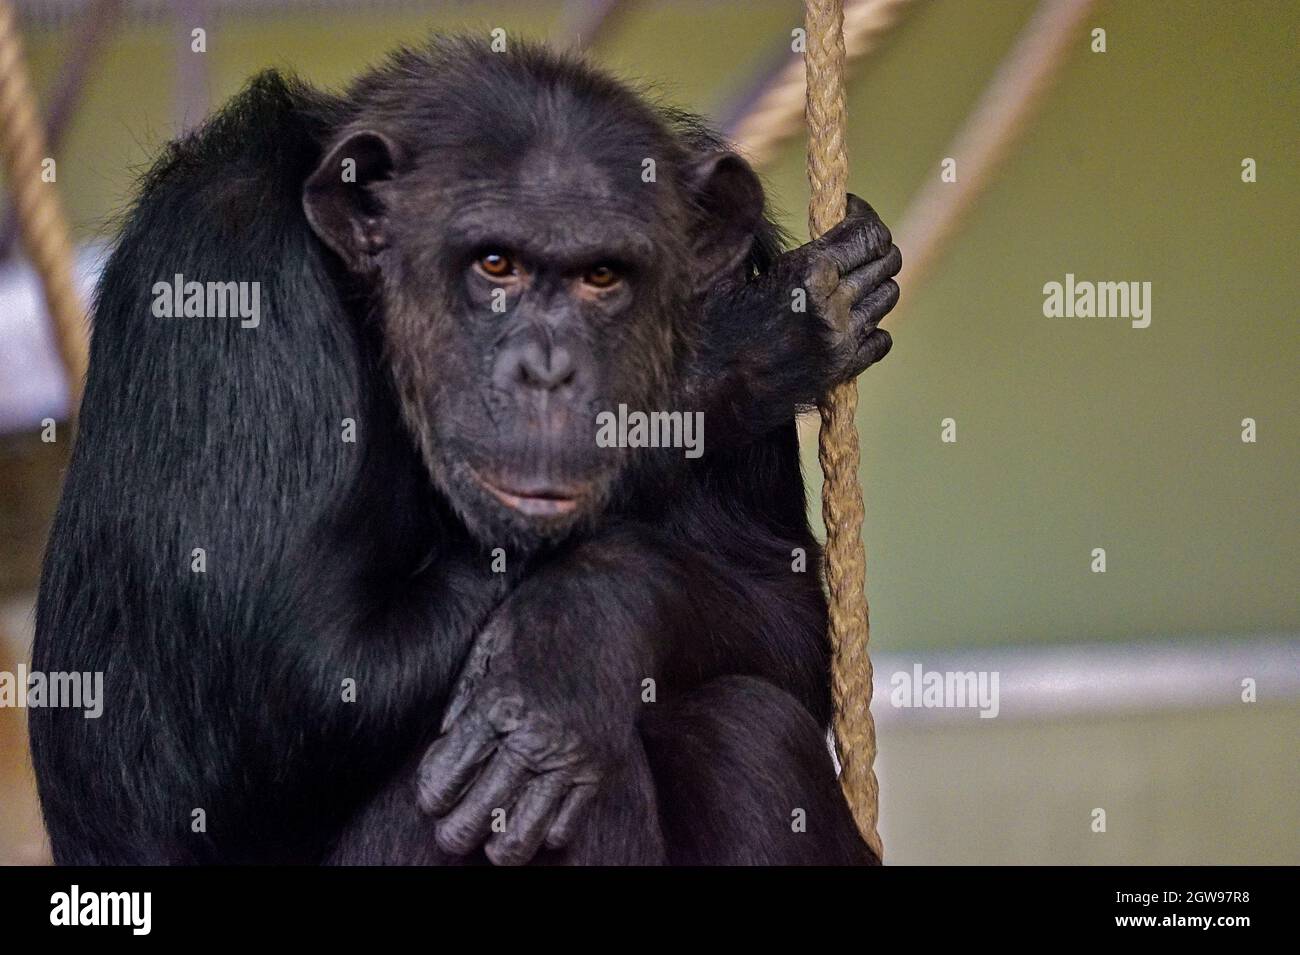 Portrait Of A Monkey, Shimpanzee Stock Photo